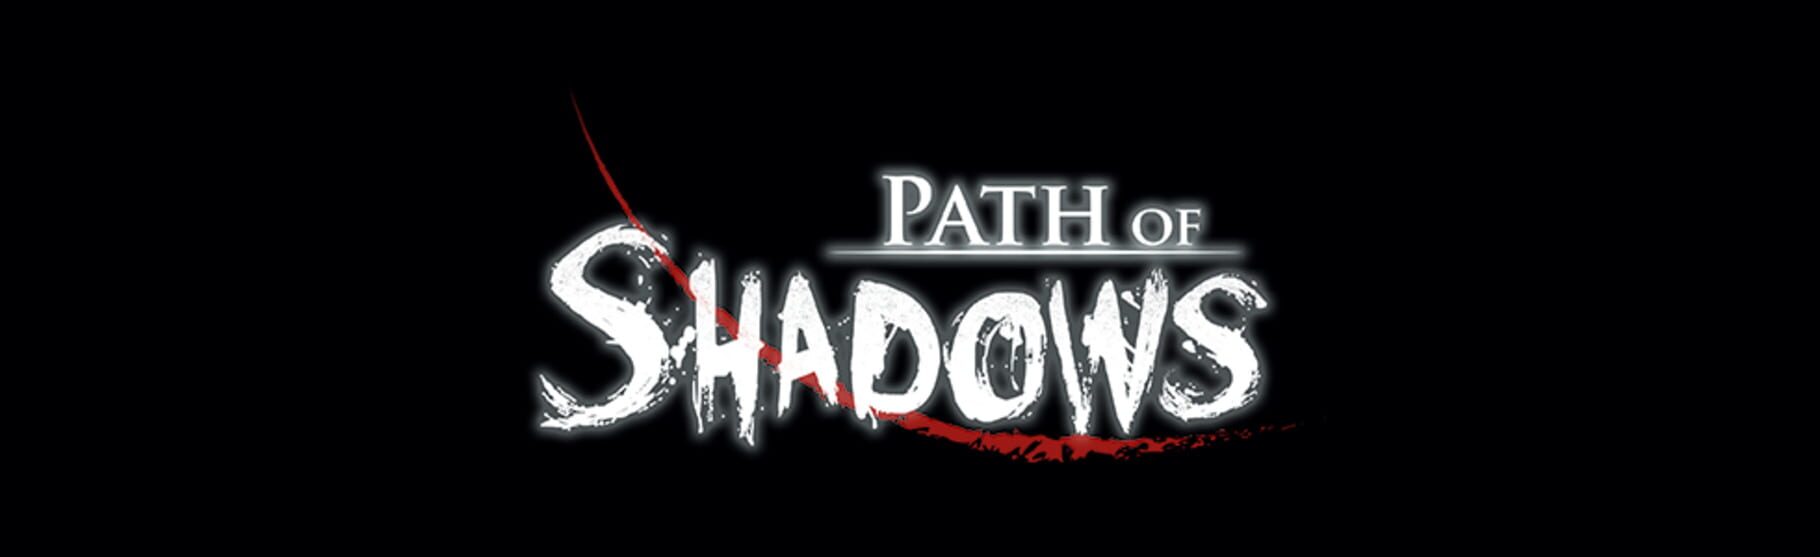 Path of Shadows Image